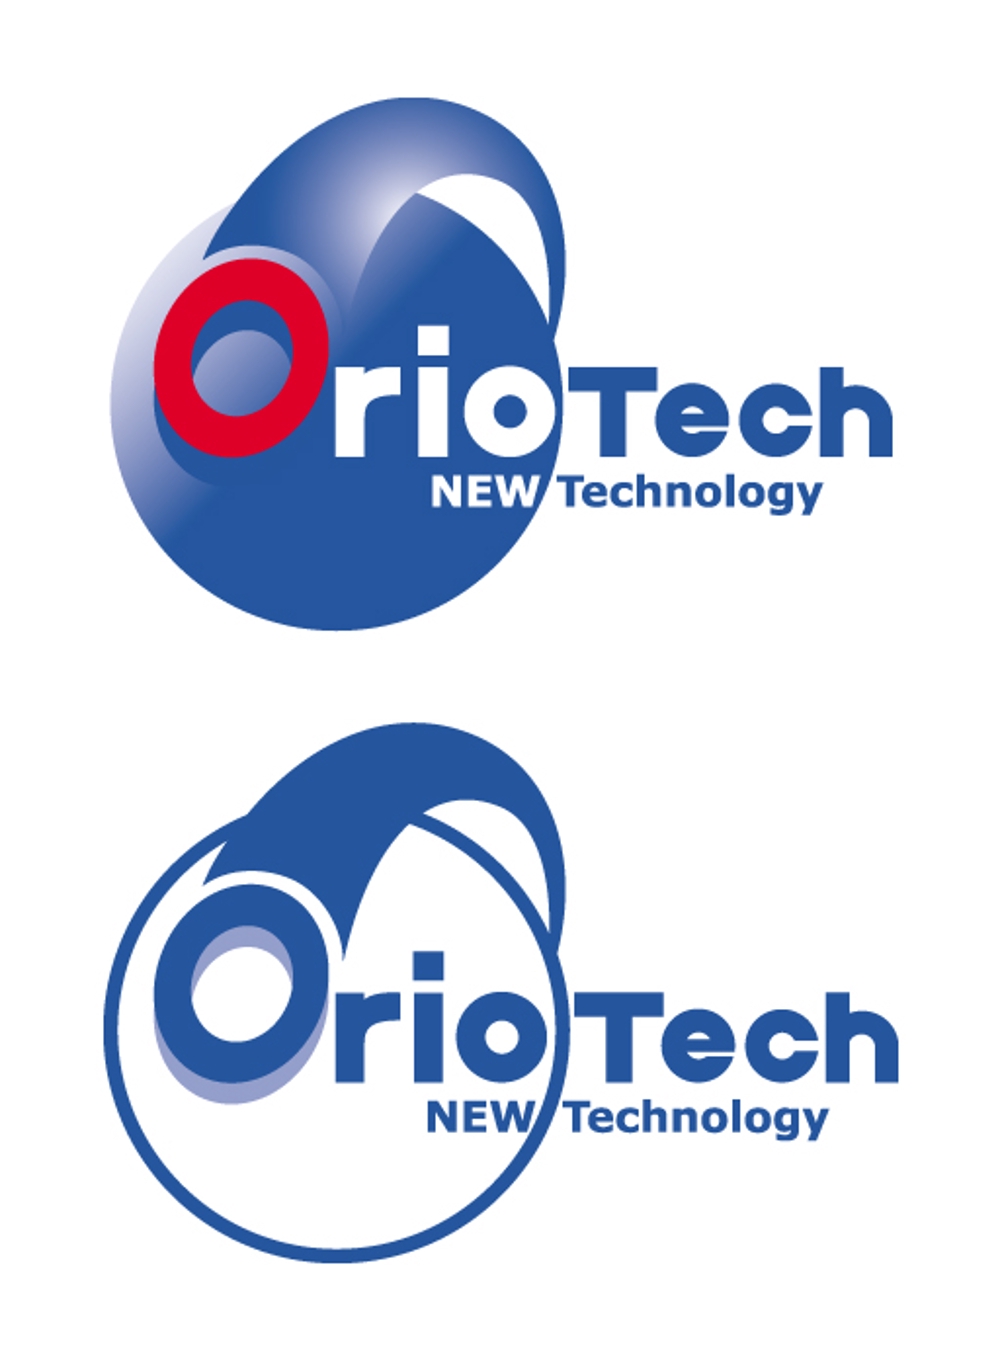 OrioTech.jpg